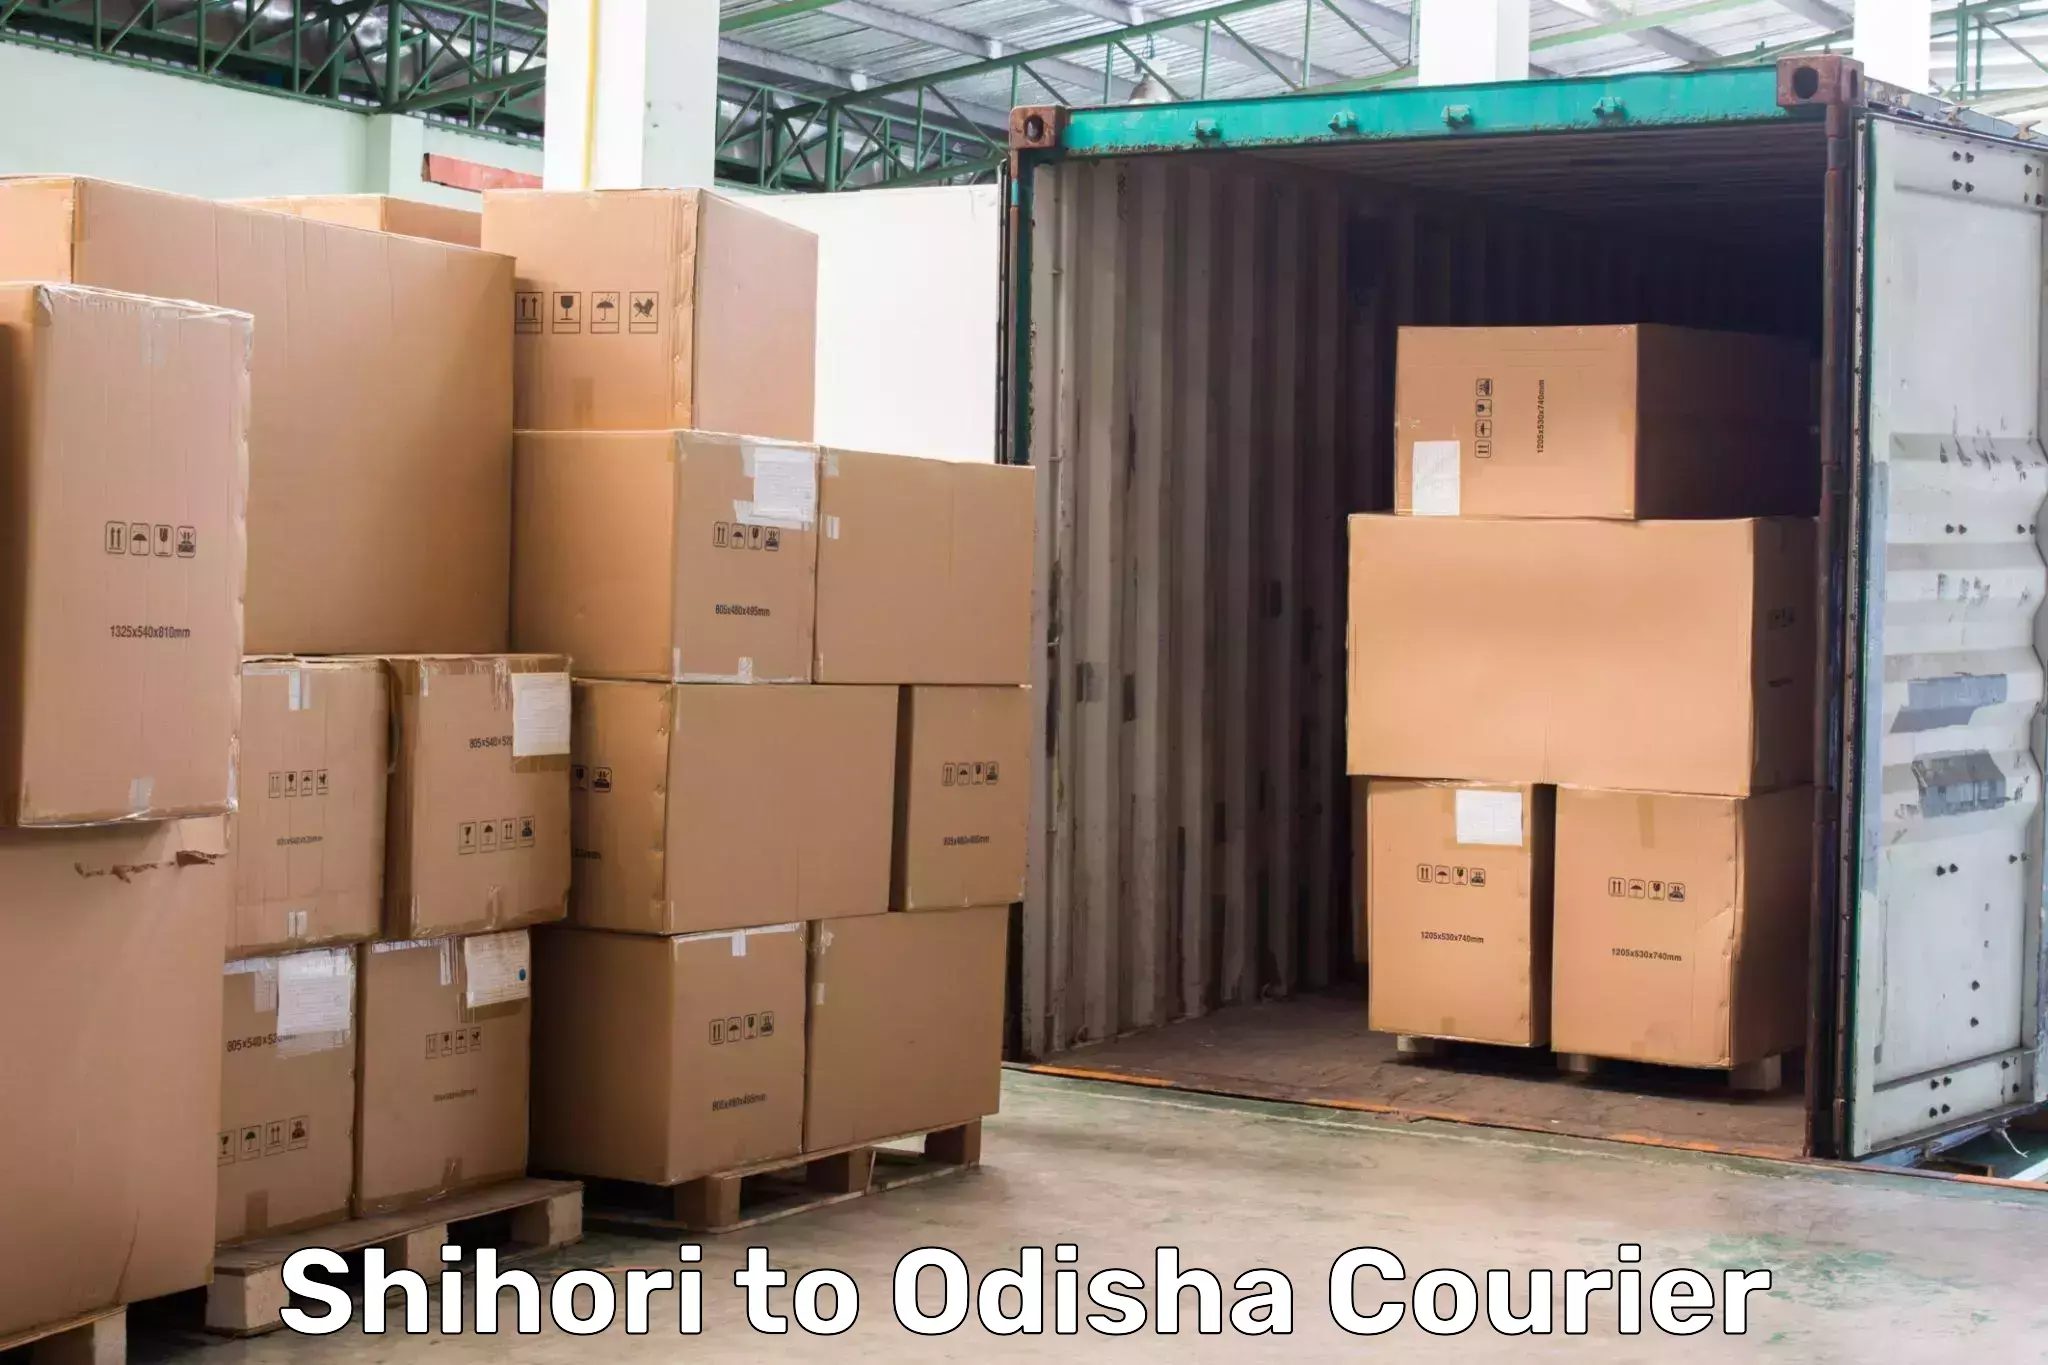 Courier service partnerships Shihori to Odisha